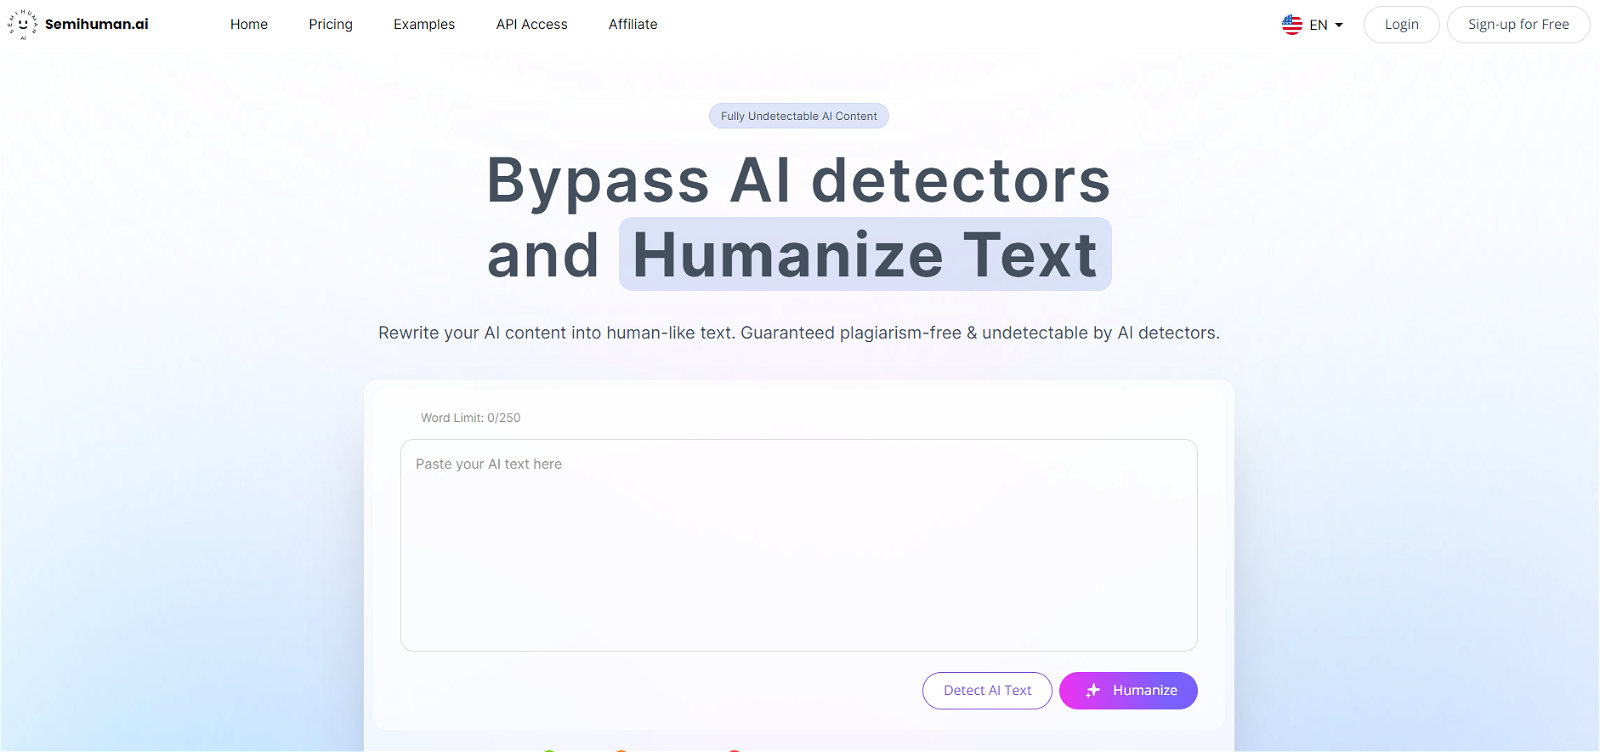 Semihuman AI website